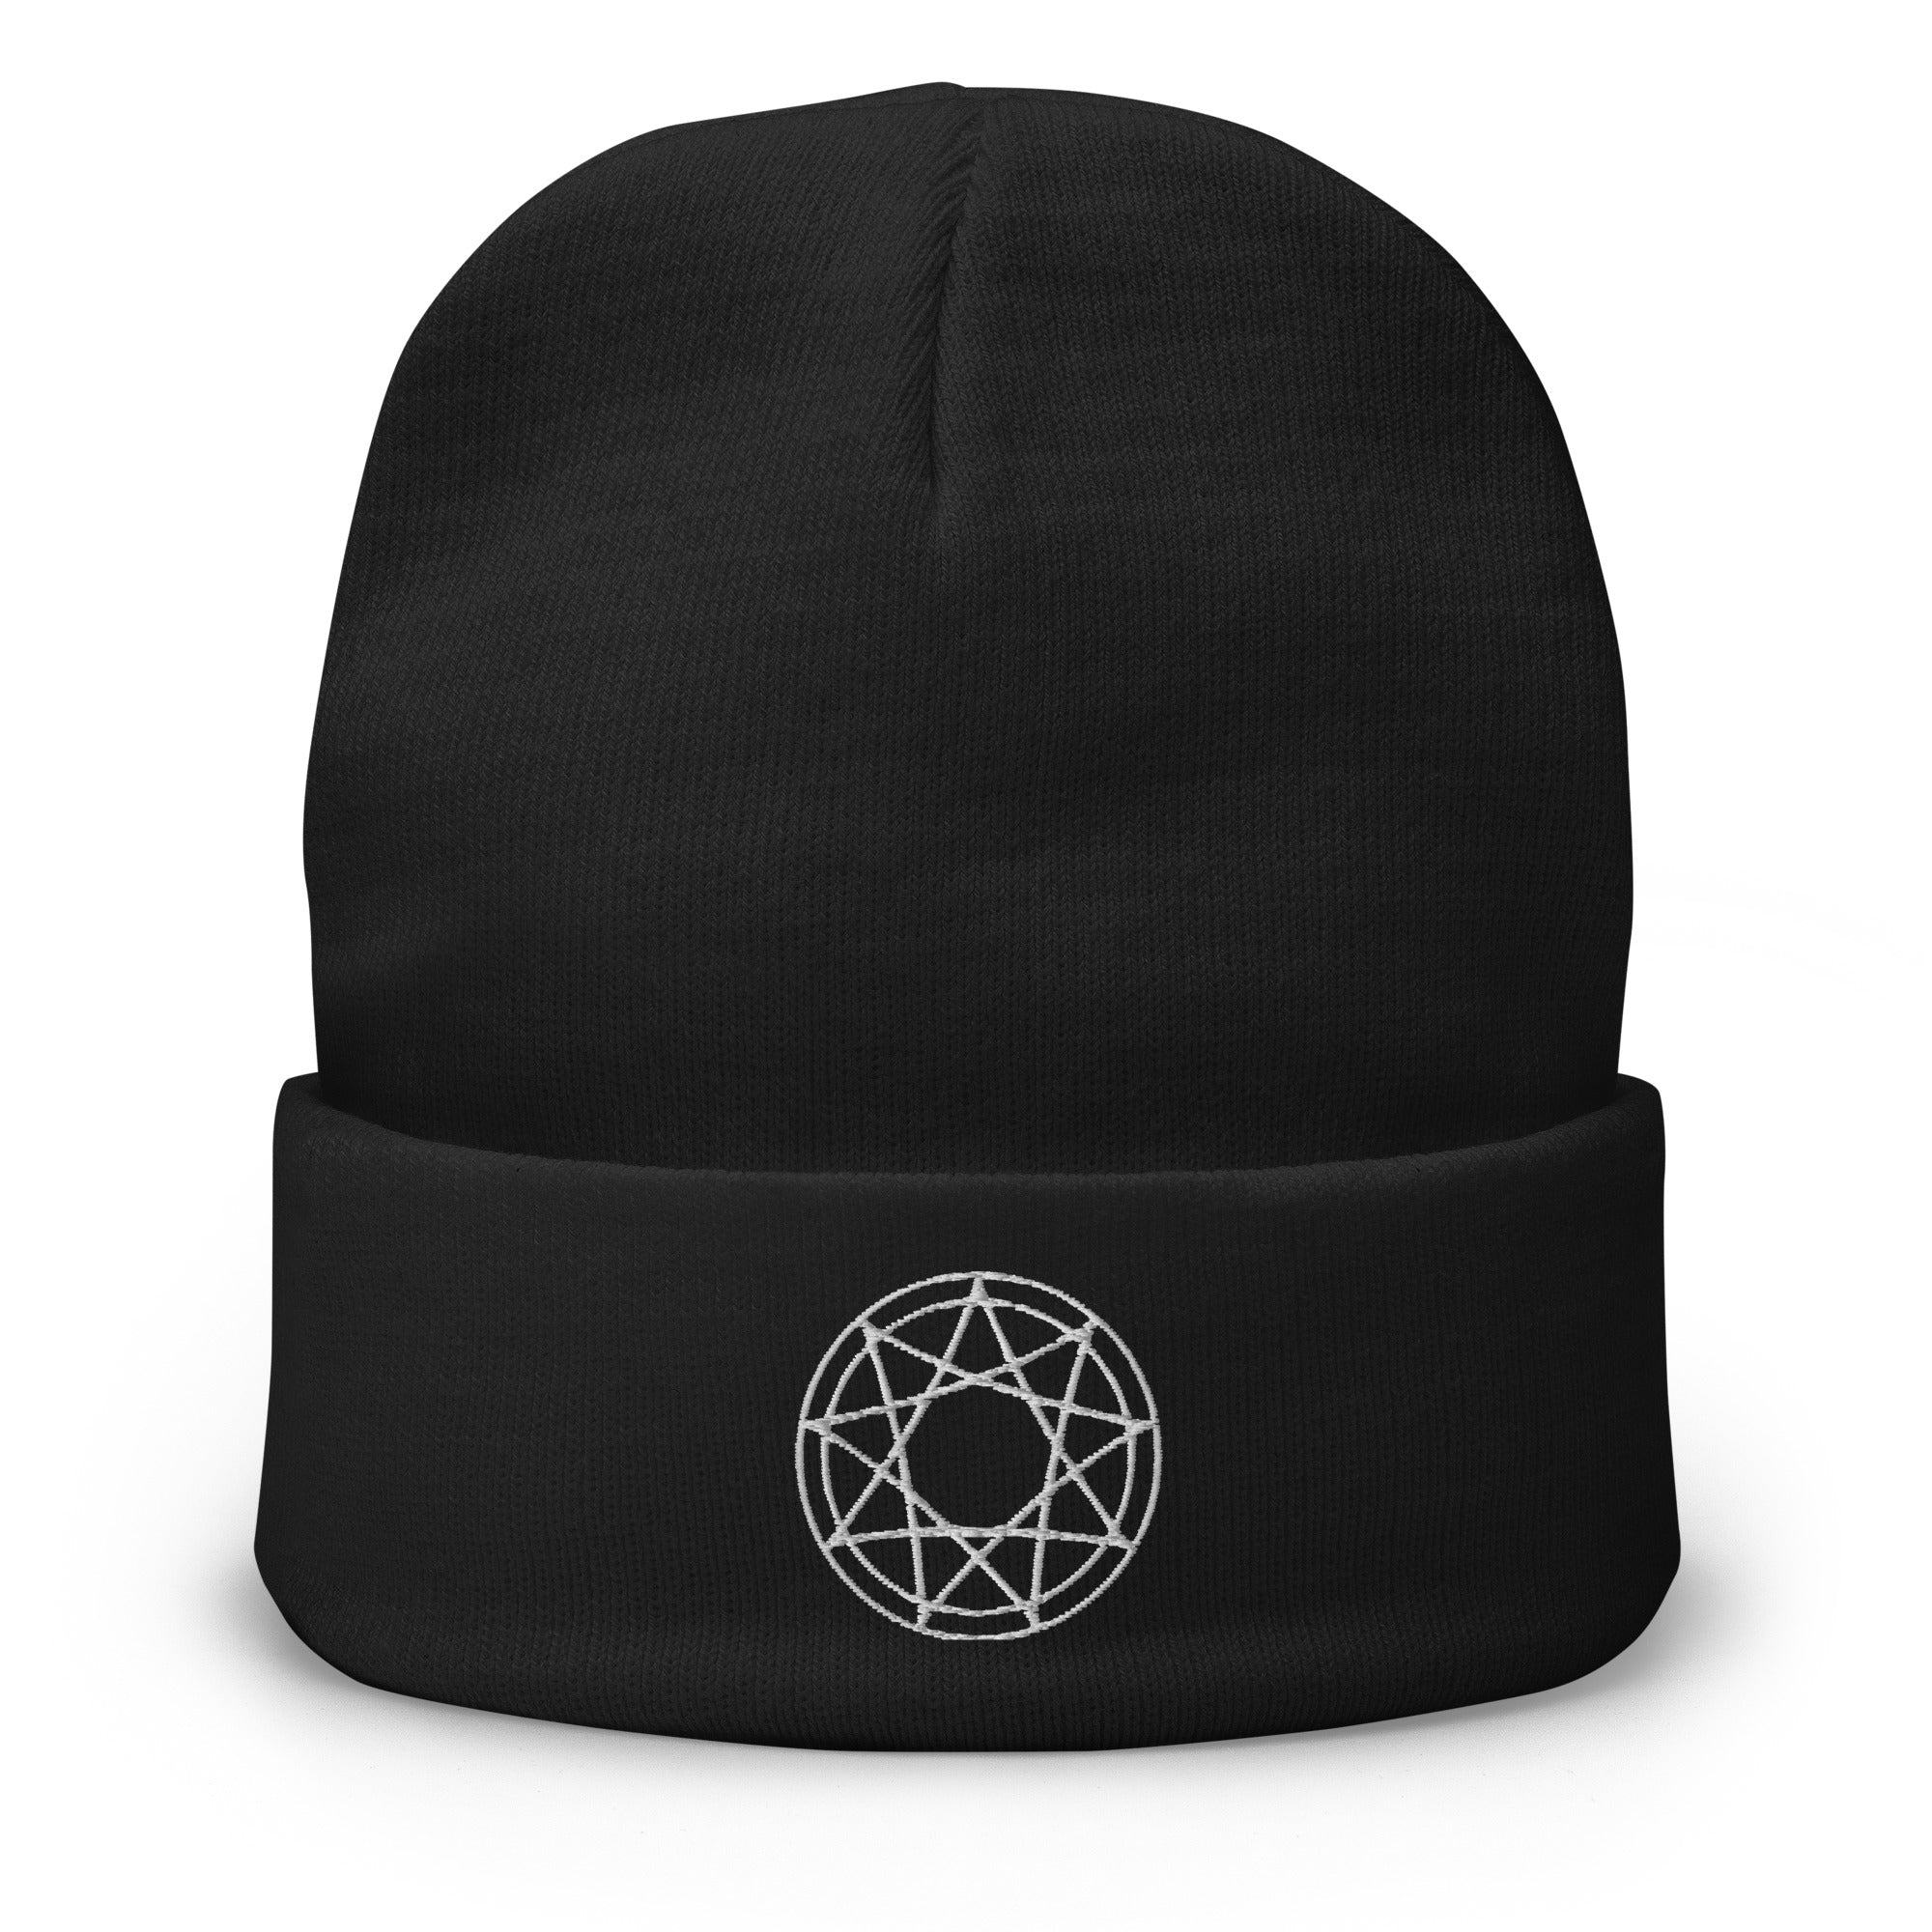 9 Point Star Pentagram Occult Symbol Embroidered Cuff Beanie Slipknot White Thread - Edge of Life Designs